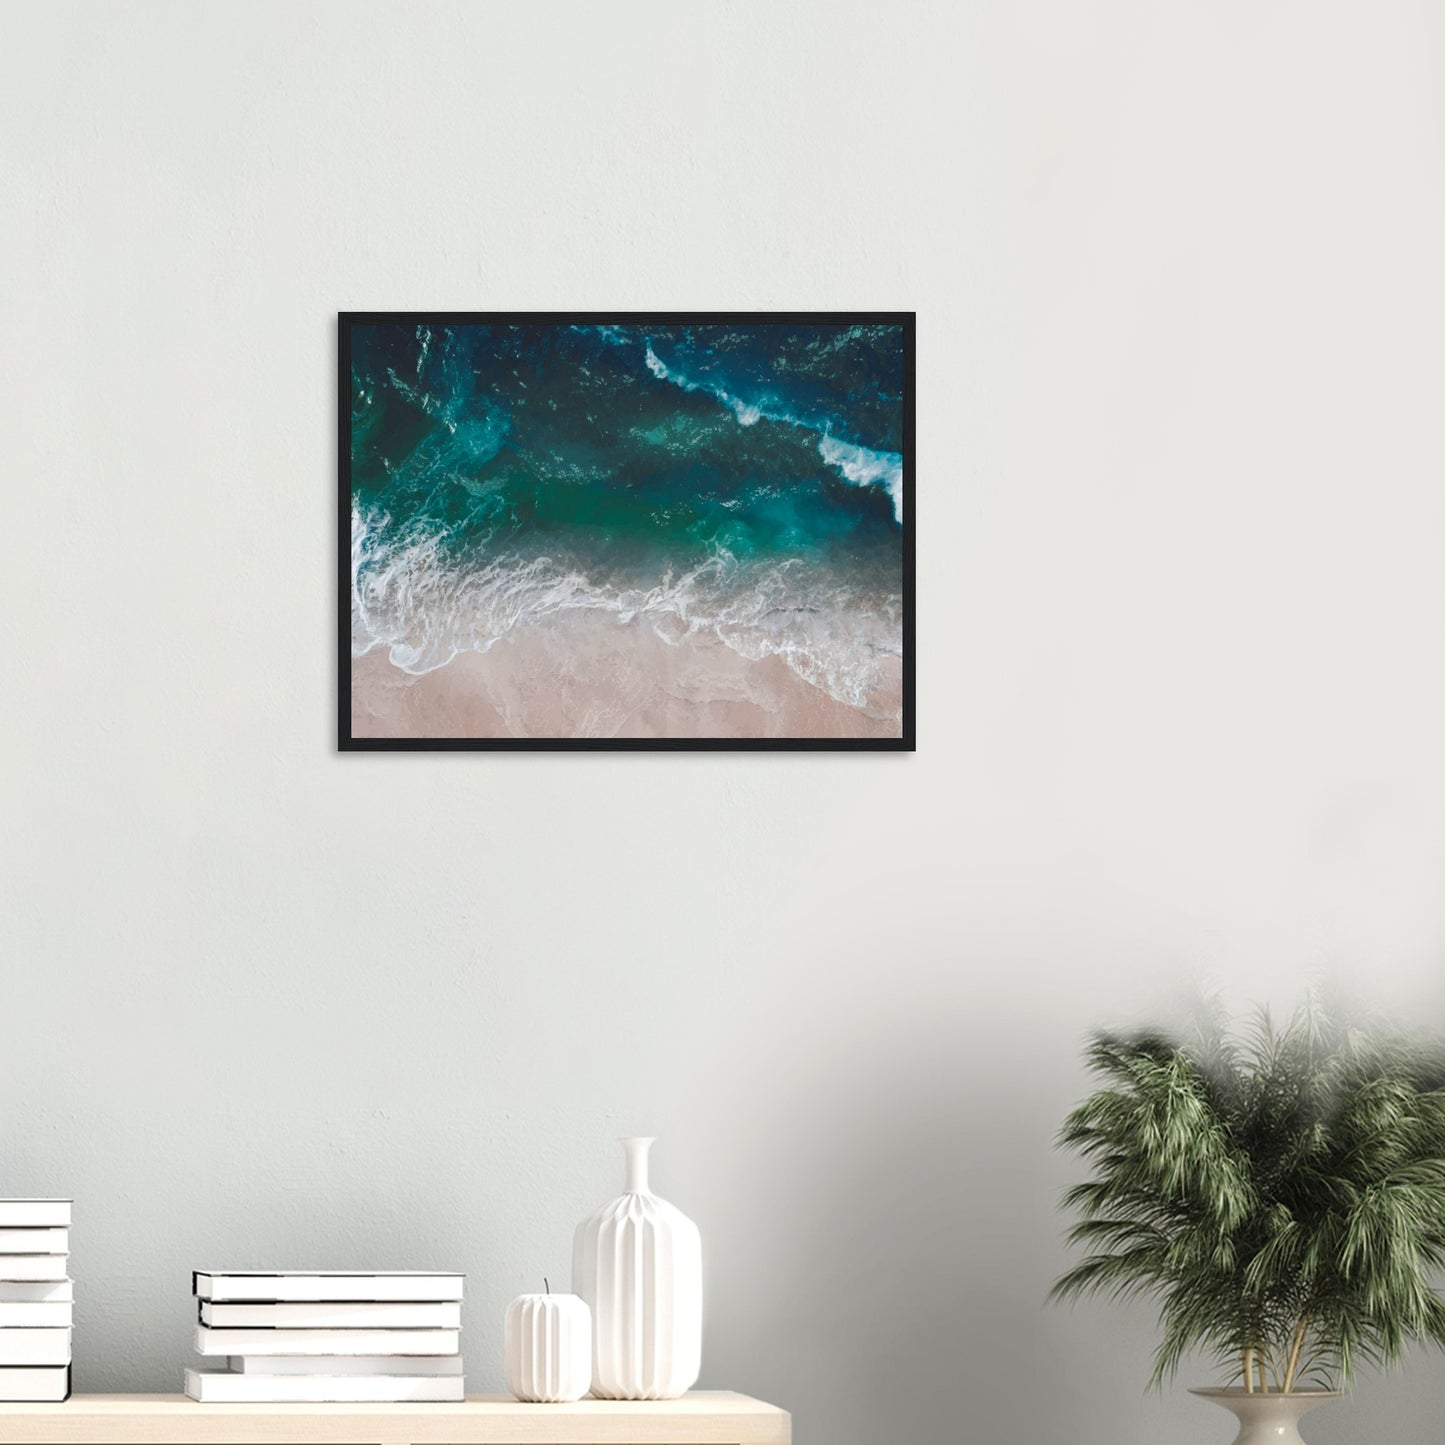 'Ocean View' wooden framed poster